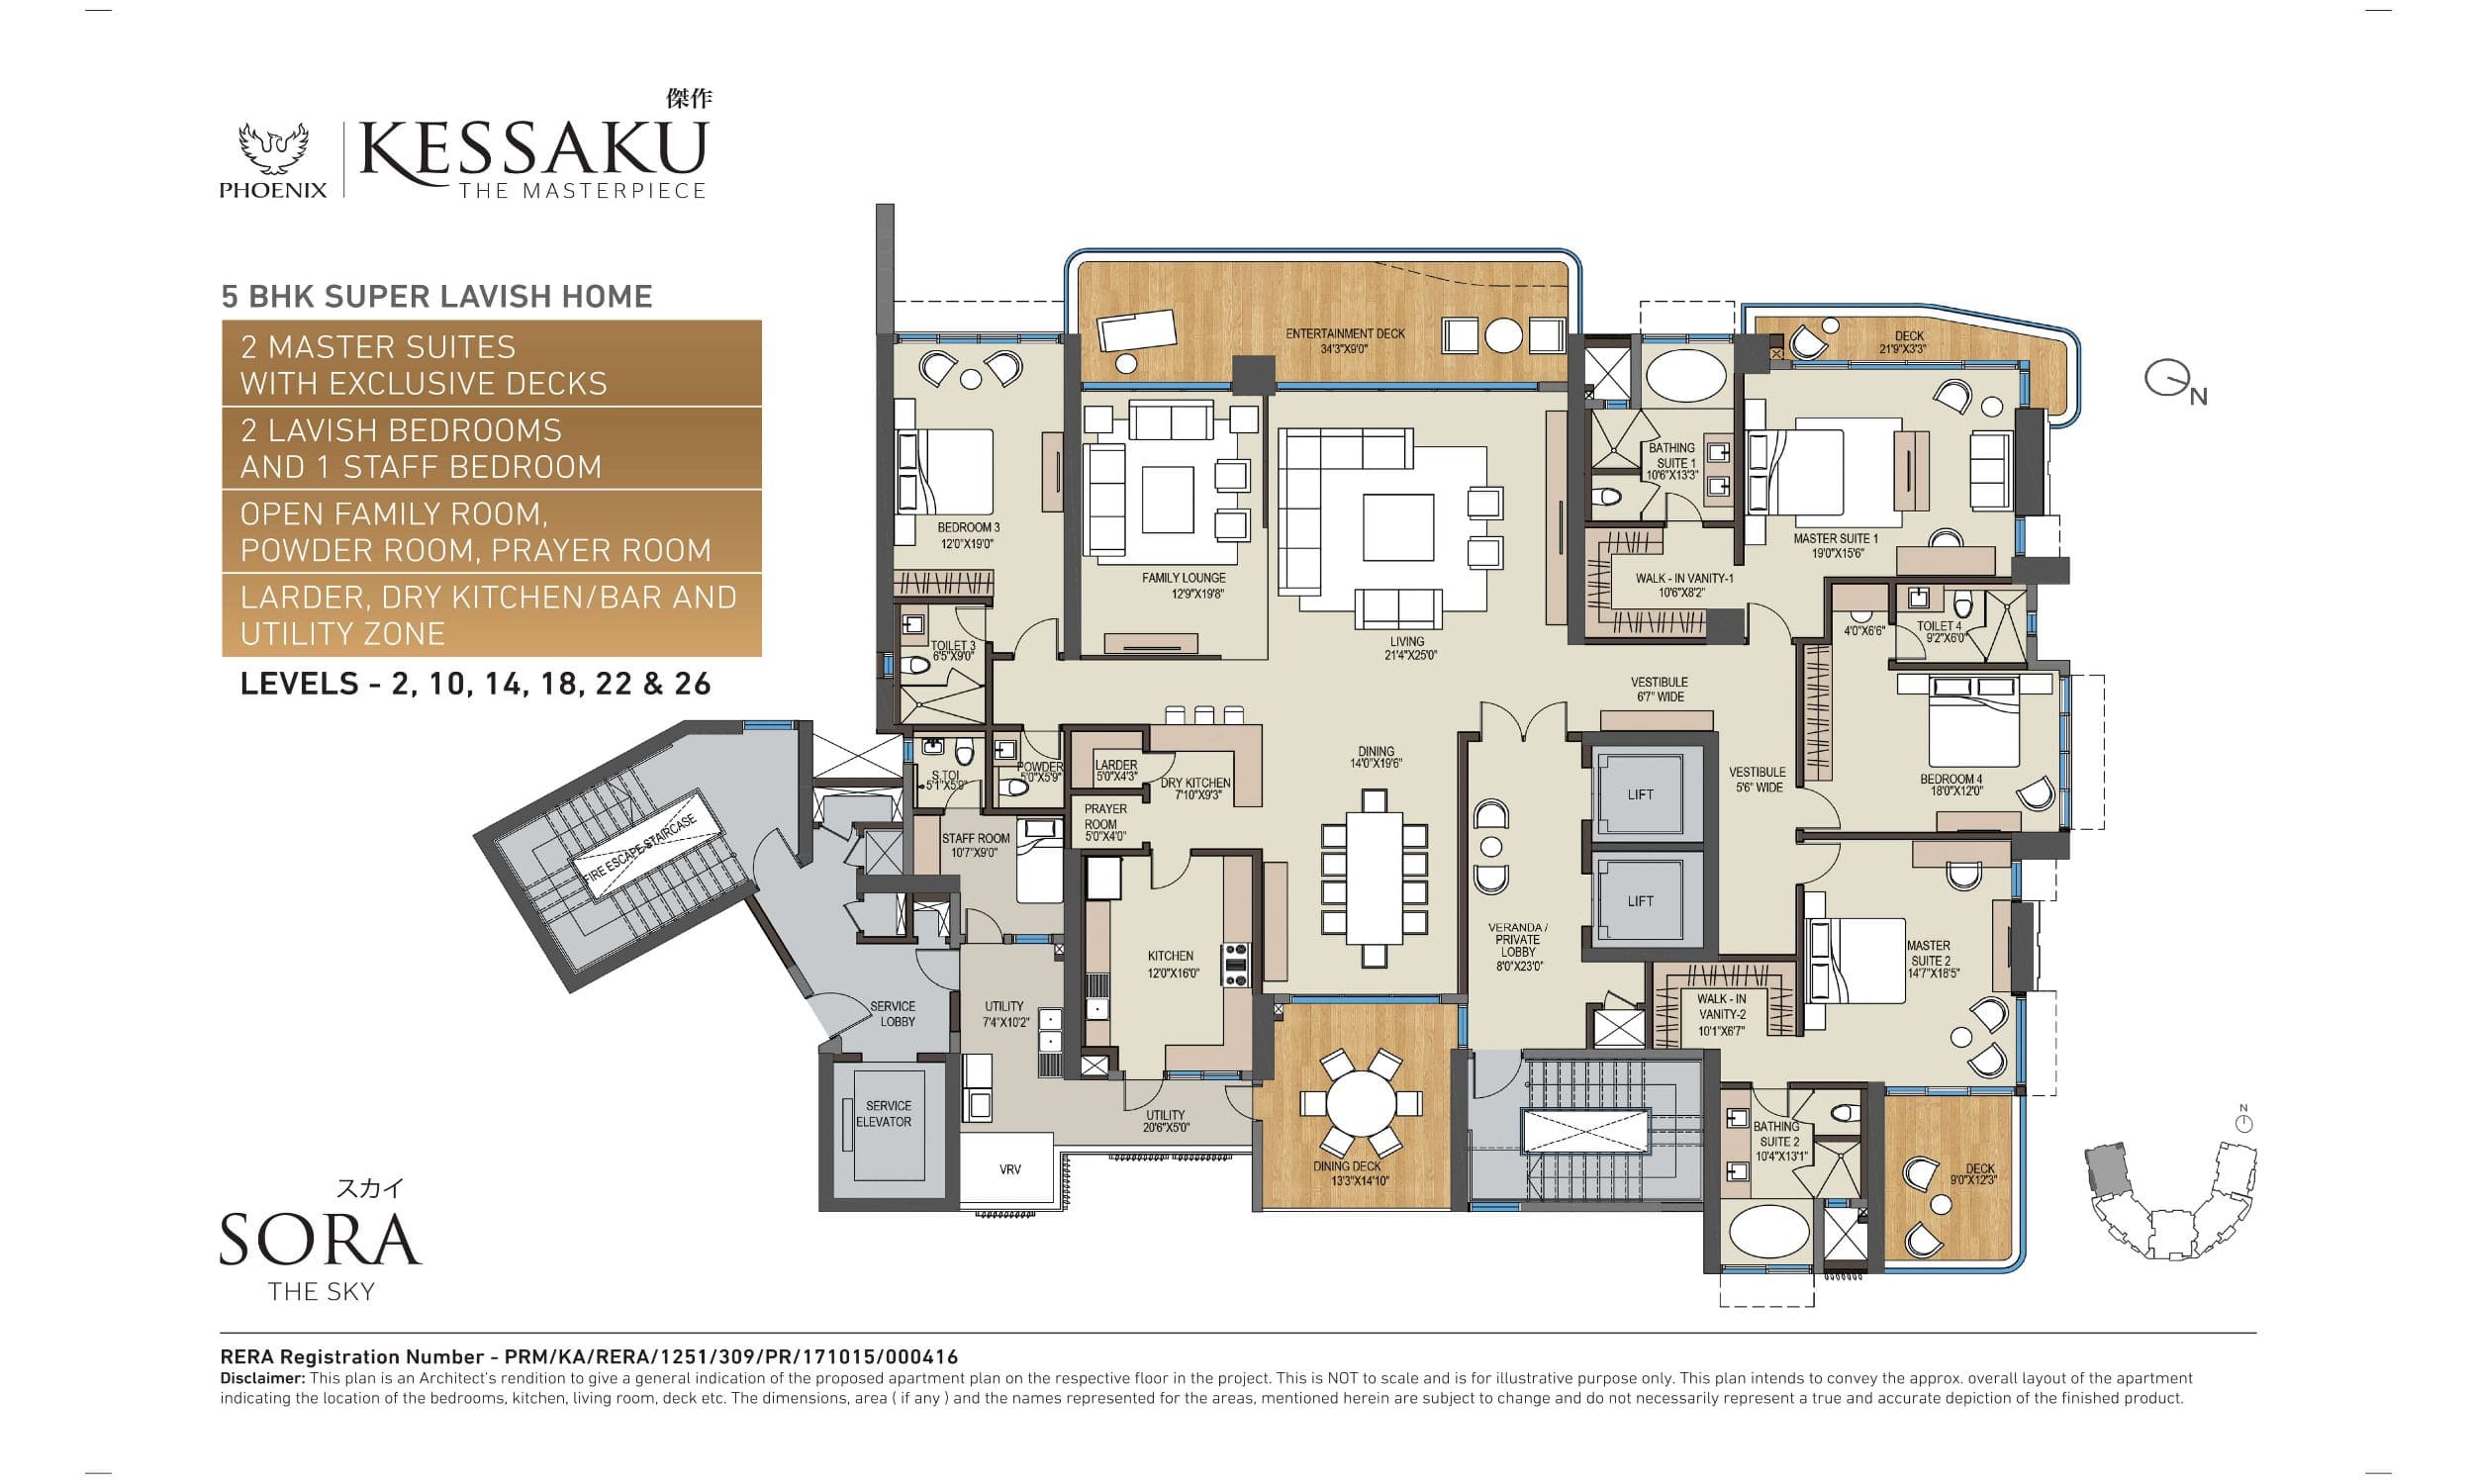 Phoenix Kessaku SORA Floor Plans (1)